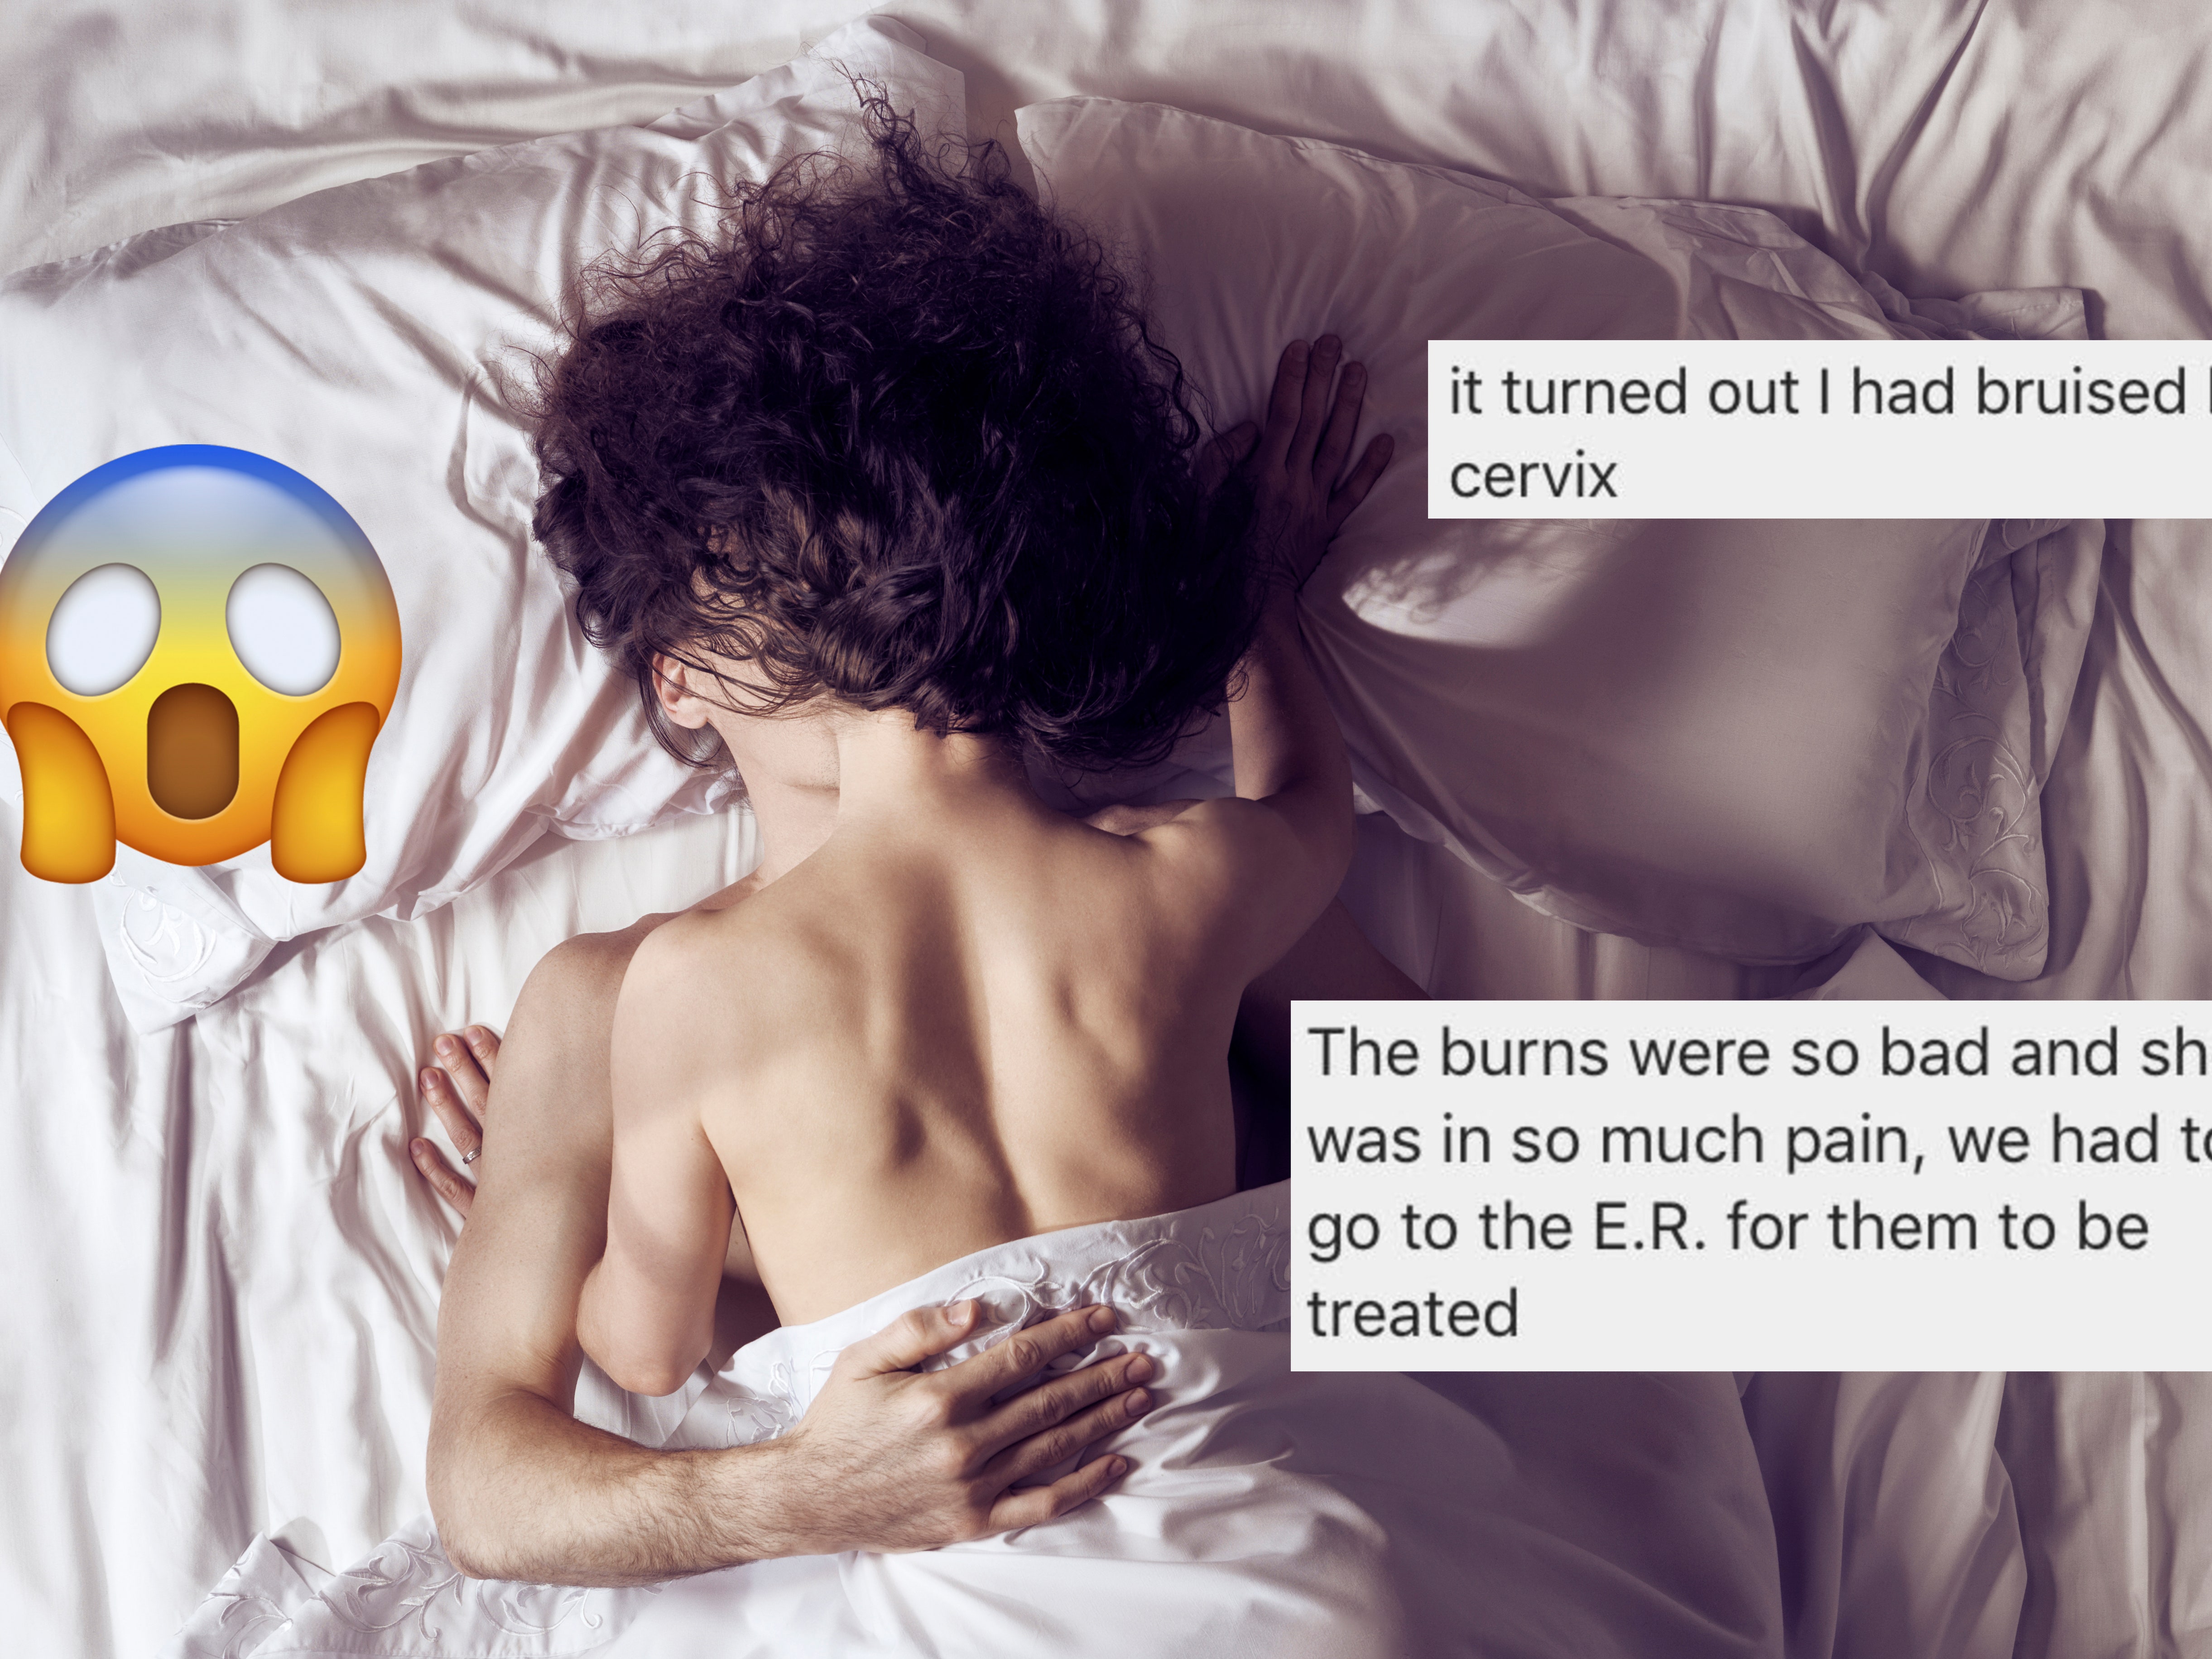 david egelhoff share forced painful anal sex photos